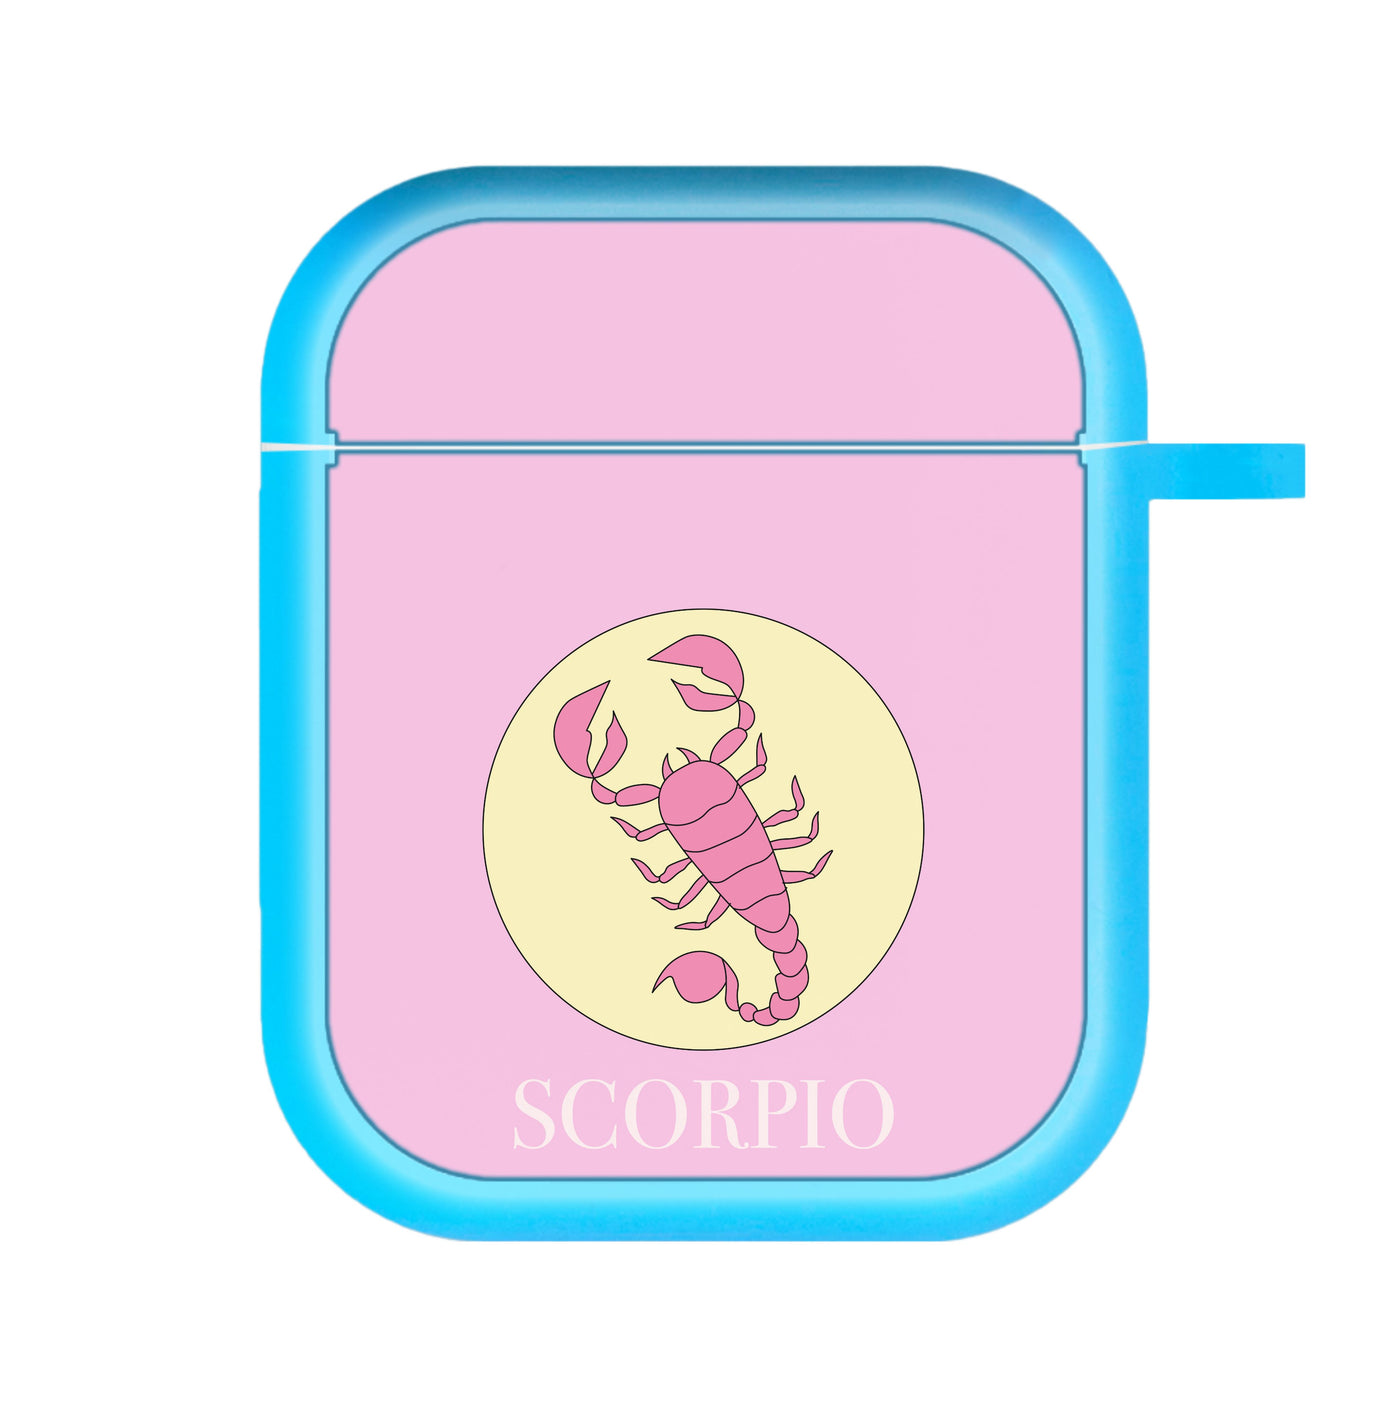 Scorpio - Tarot Cards AirPods Case